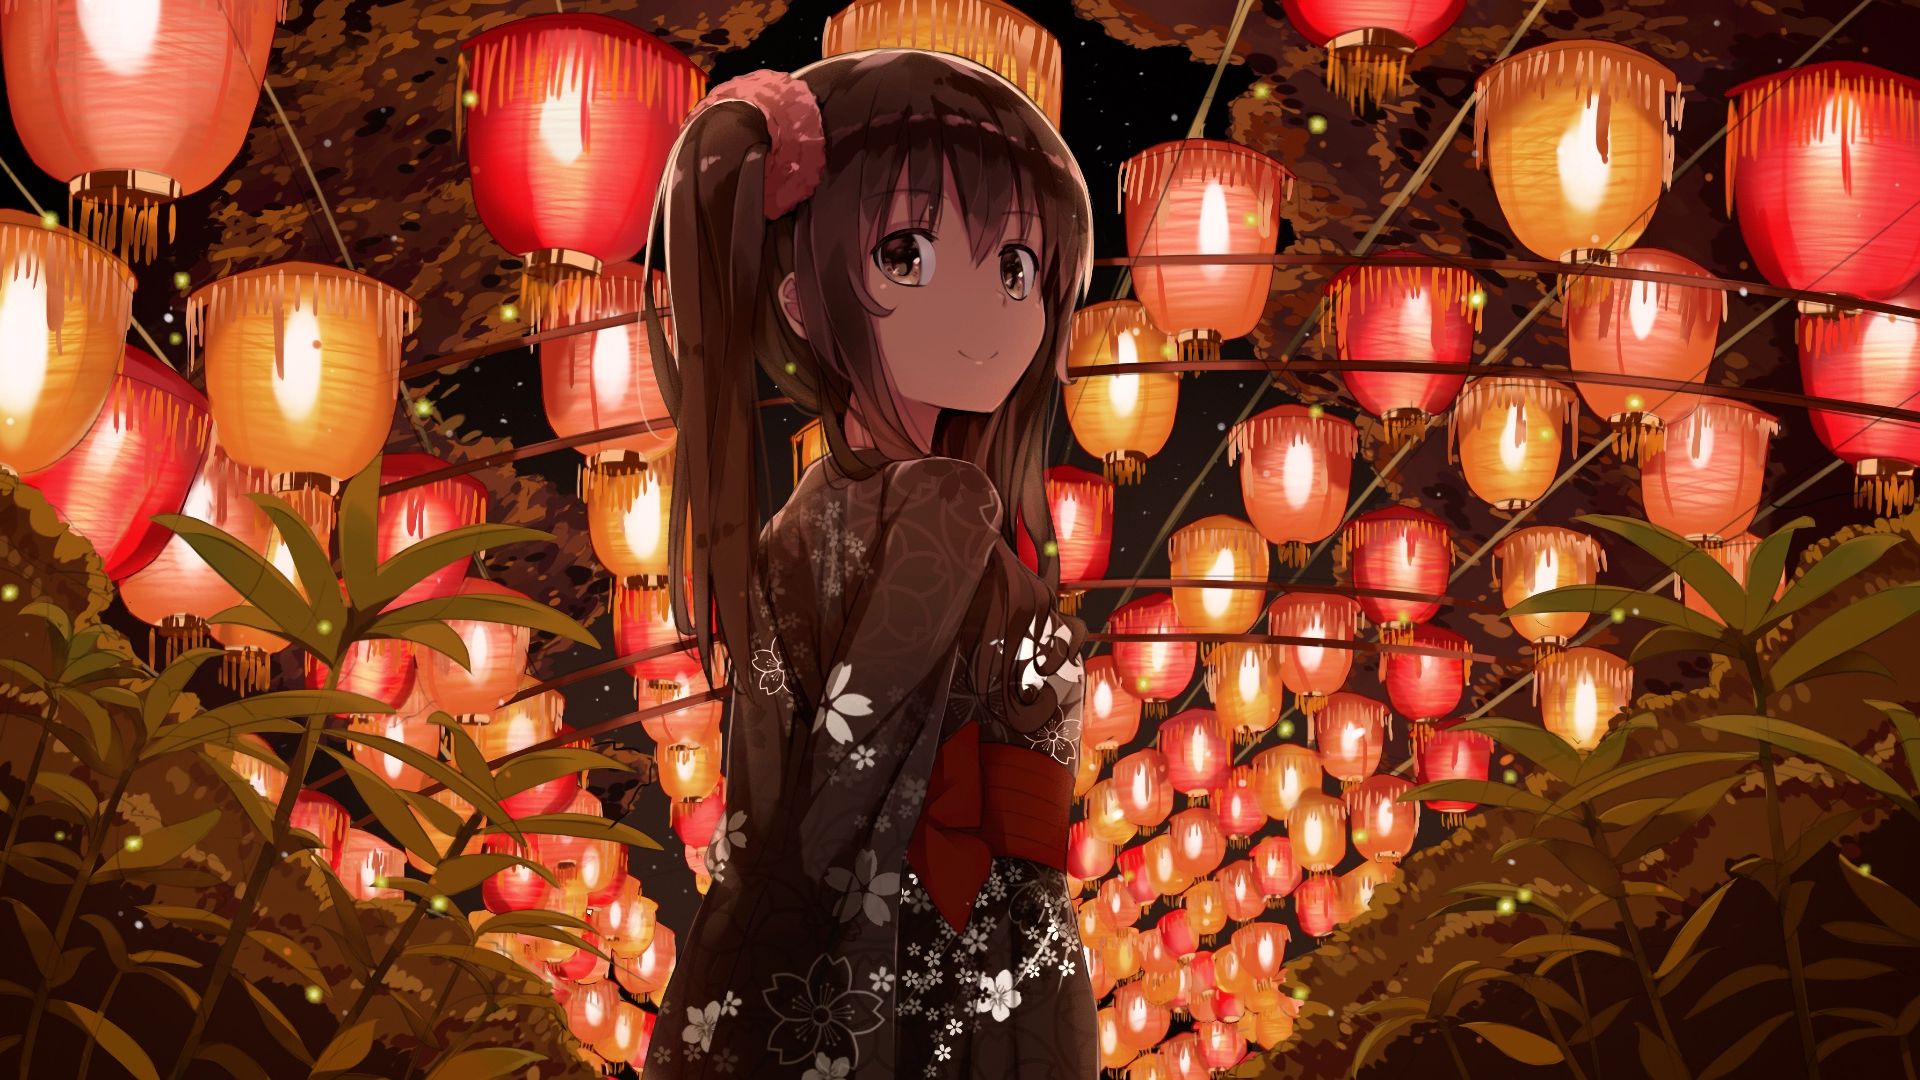 Wallpaper Decorations, night, original, cute anime girl